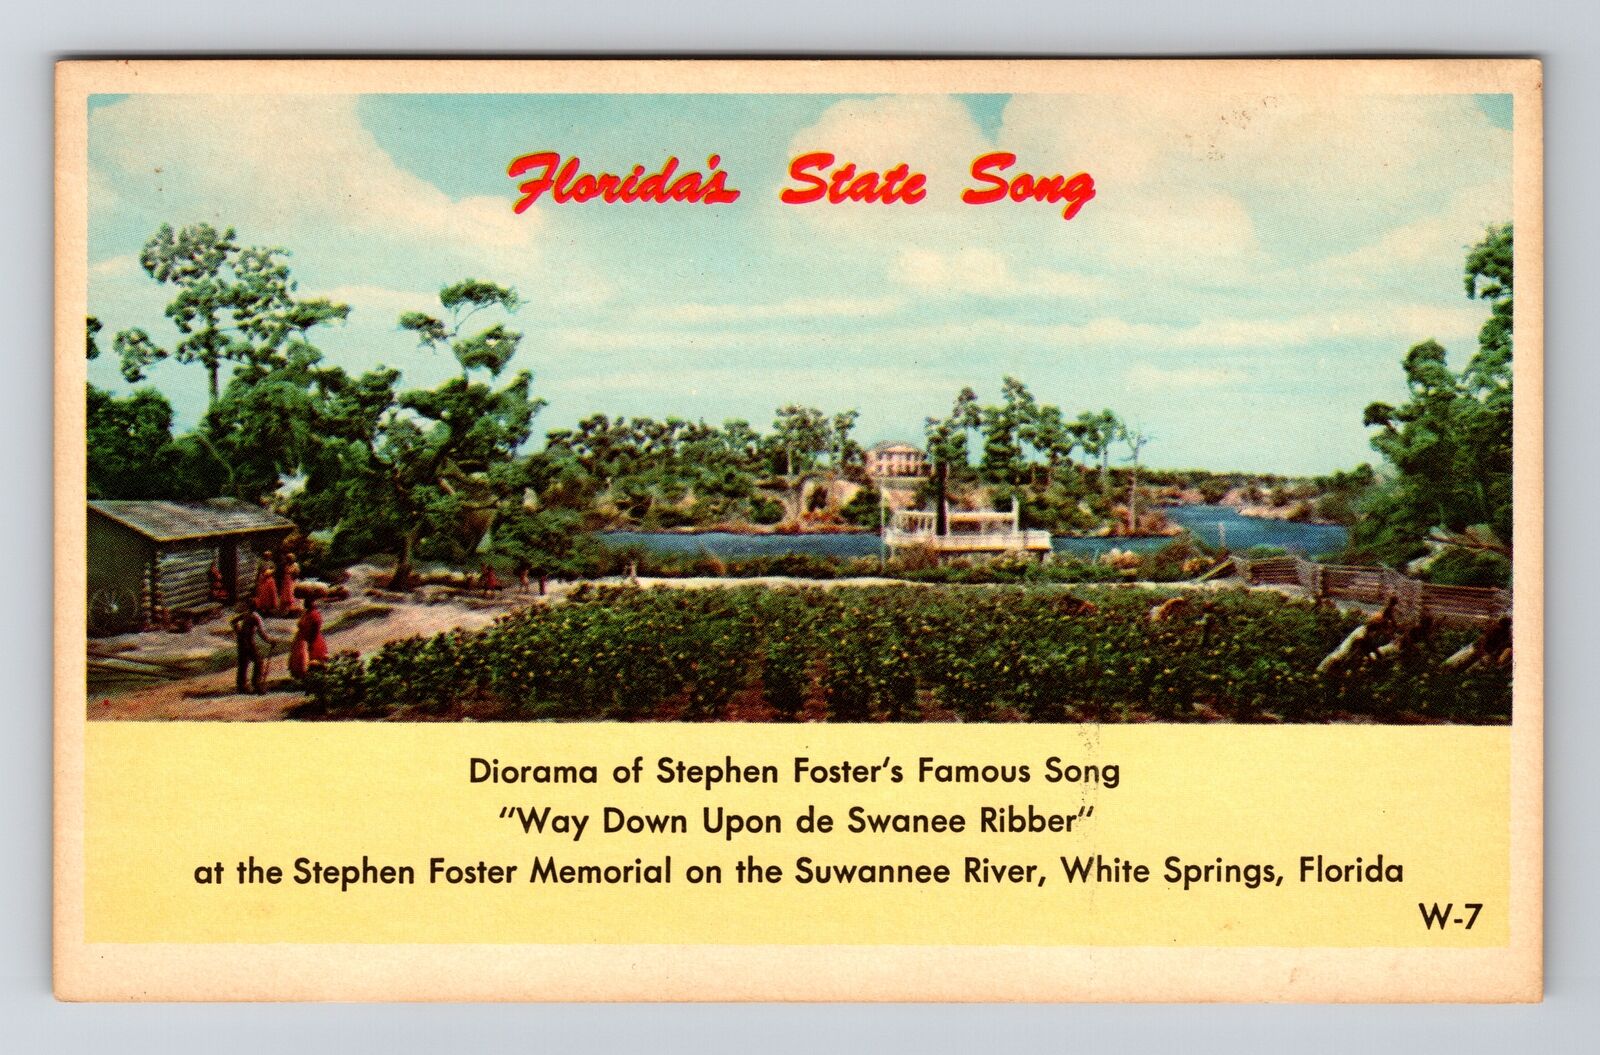 FL-Florida, Florida's State Song, Vintage Postcard